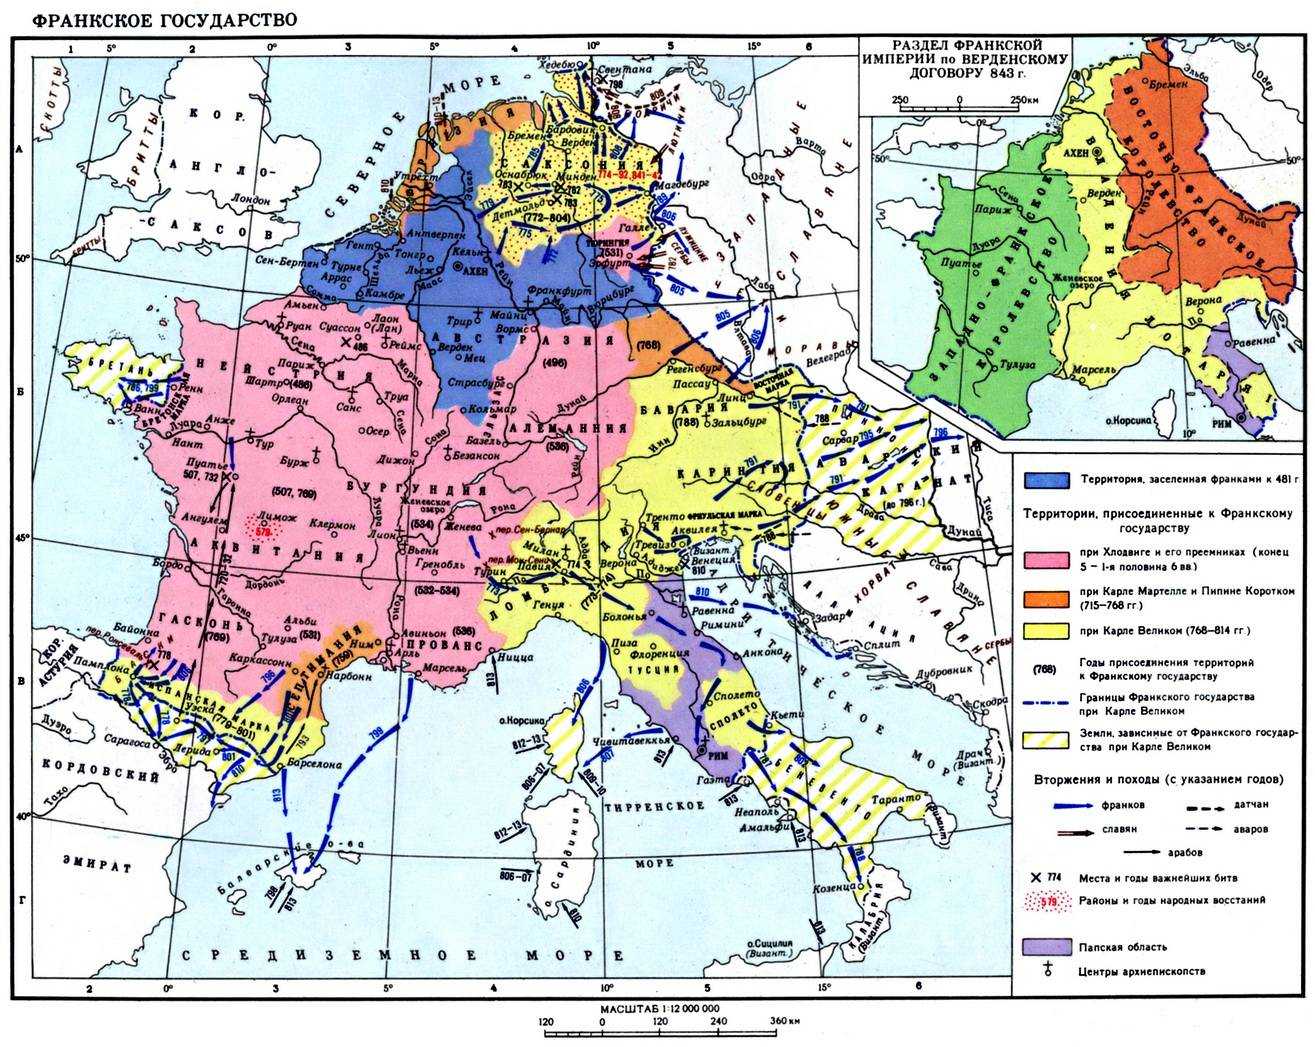 Реферат: История государства и права франков в средние века